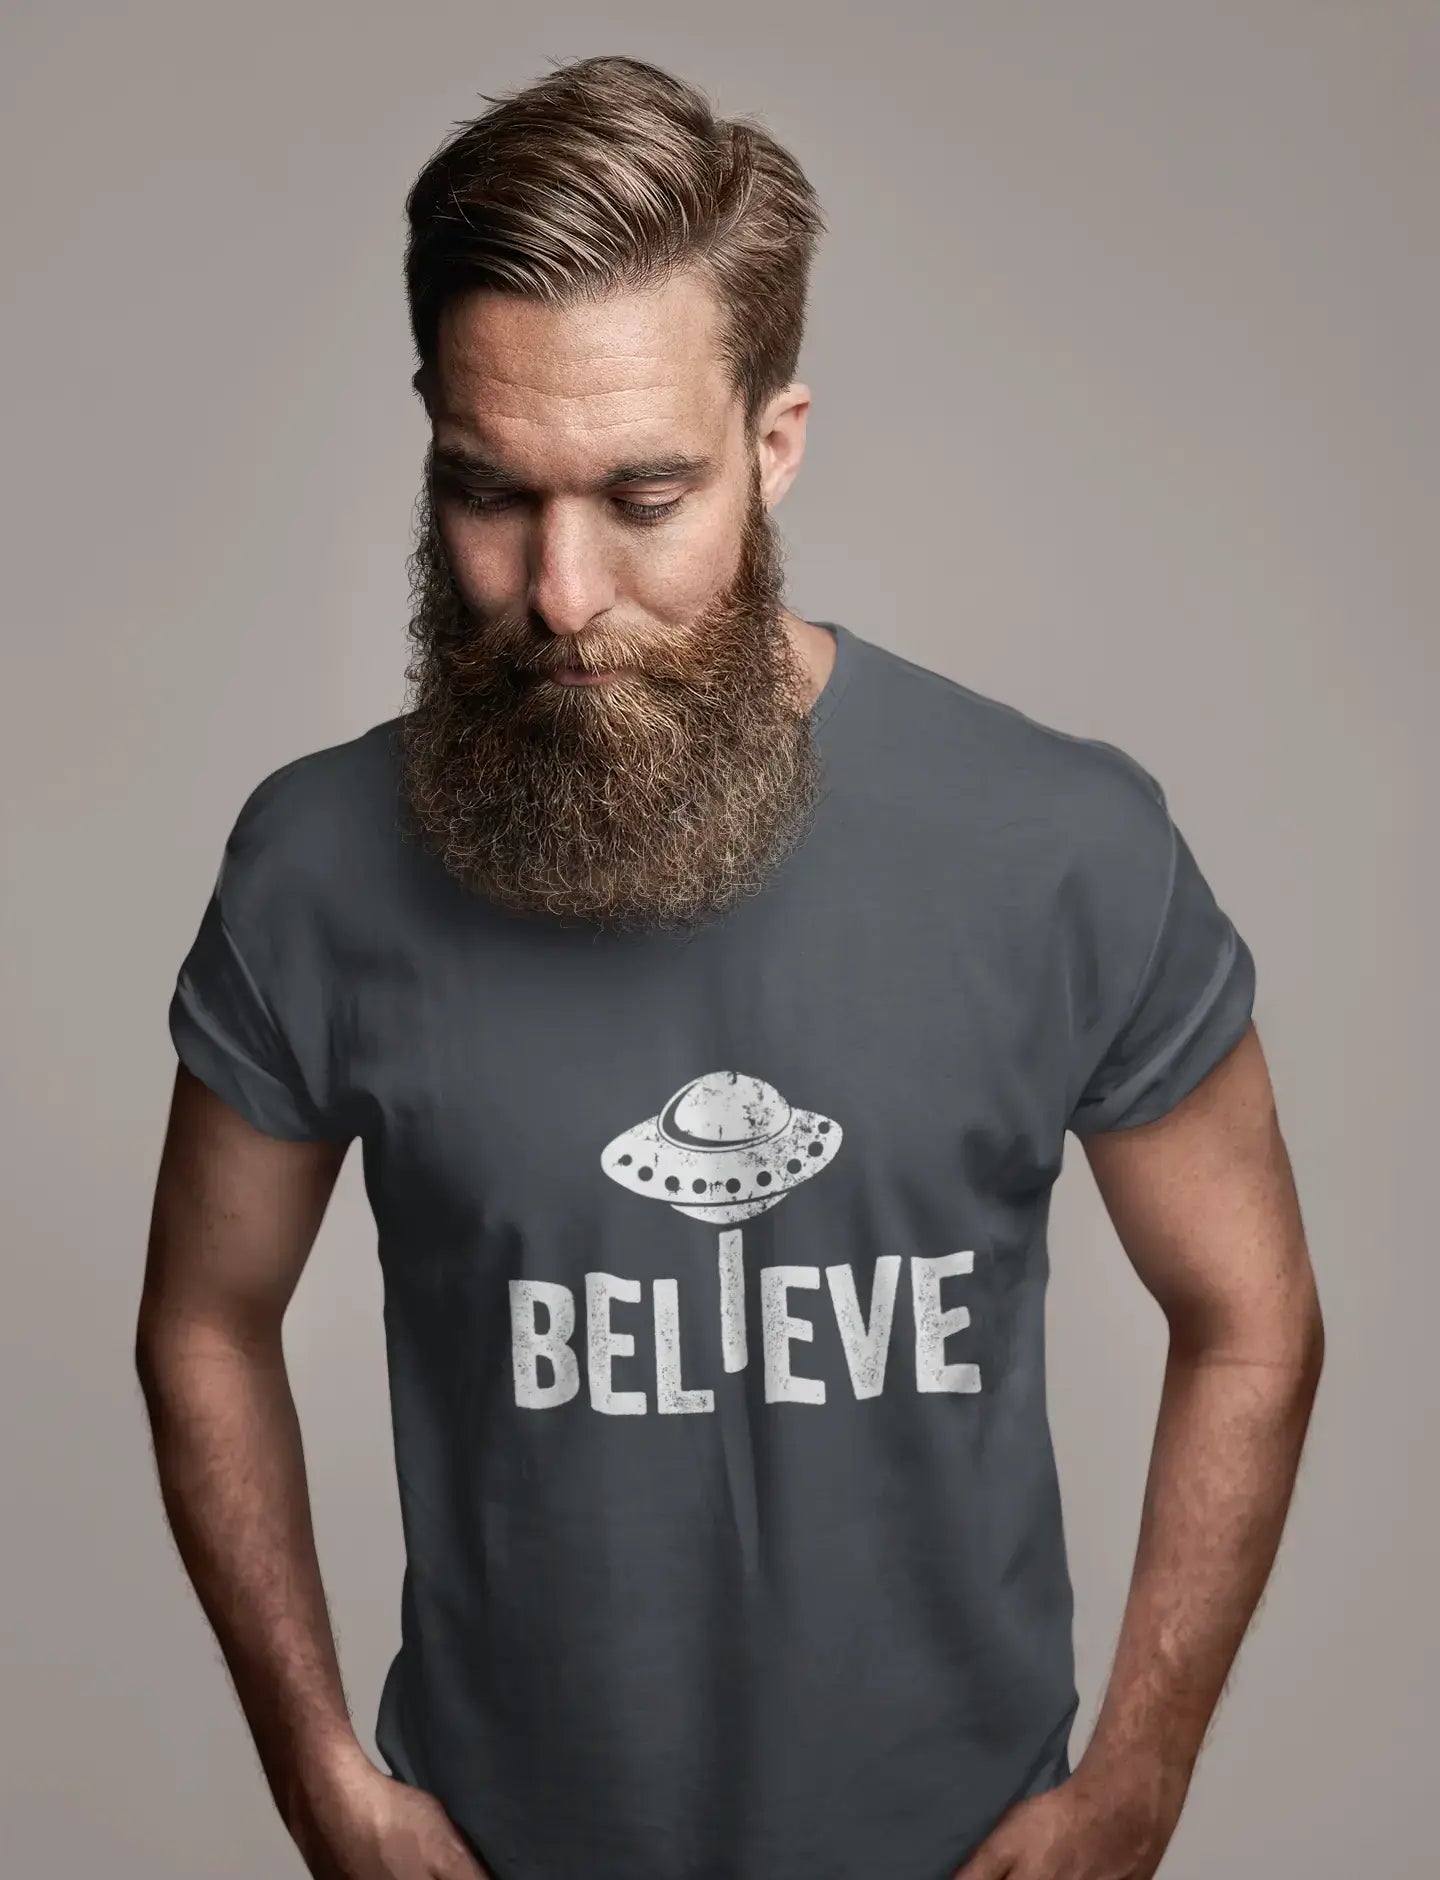 ULTRABASIC - Graphic Men's Believe UFO Alien T-Shirt Funny Casual Letter Print Tee Navy